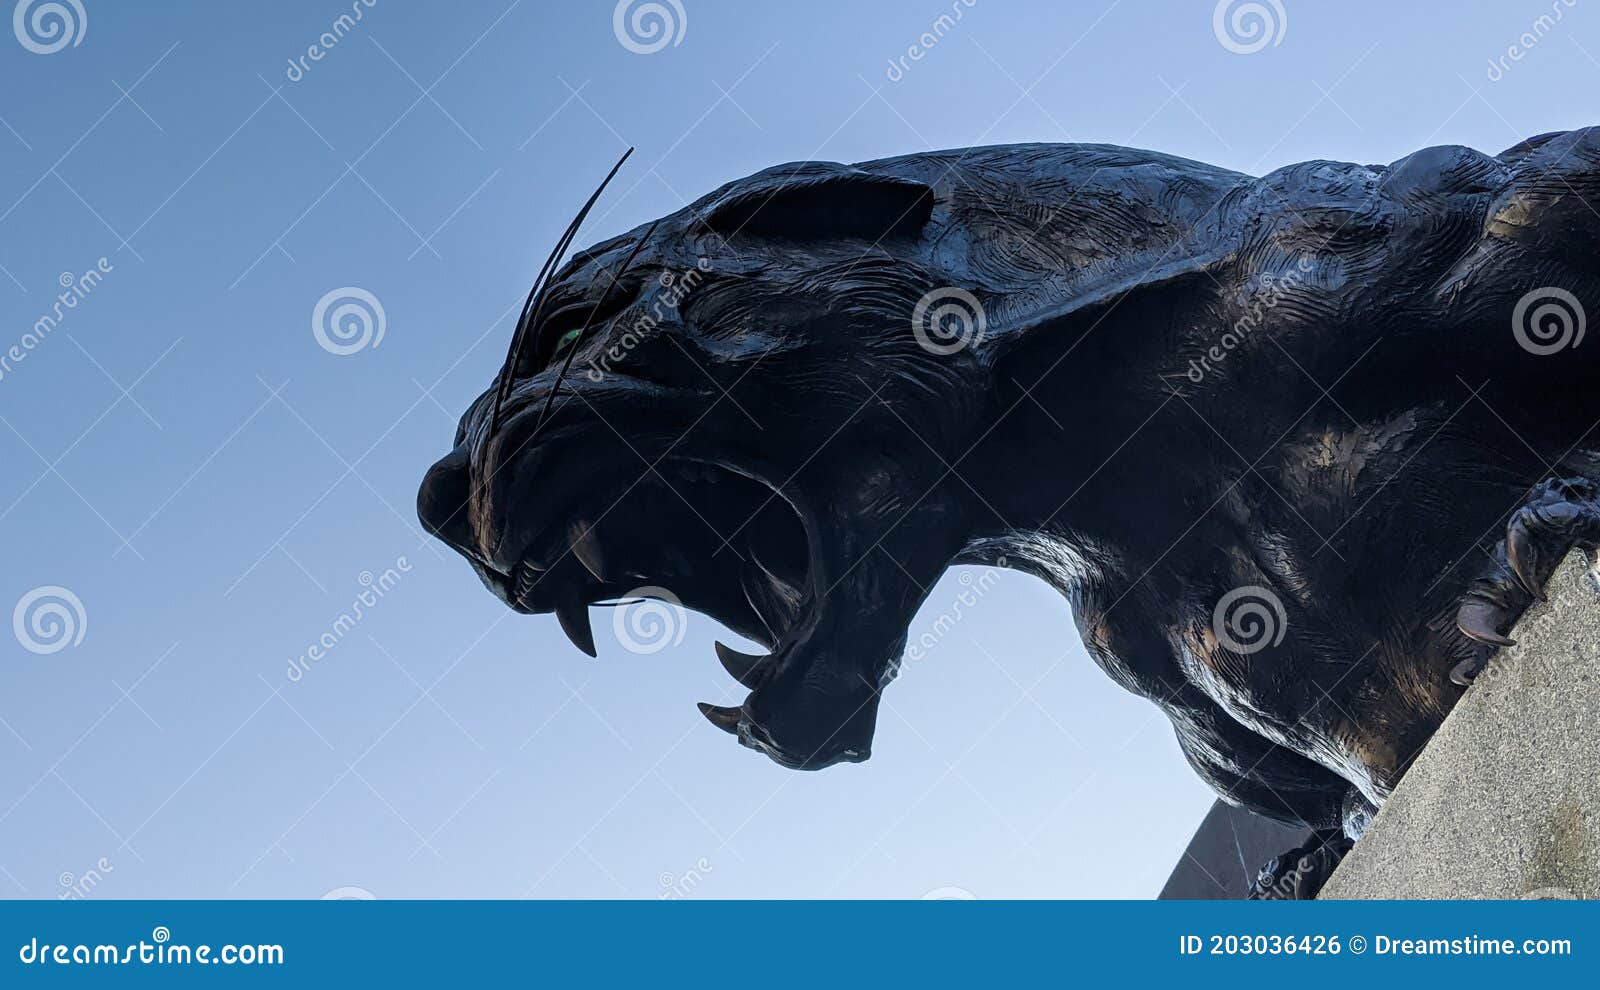 Carolina Panthers Football Stadium Big Cat Statue, Charlotte, NC